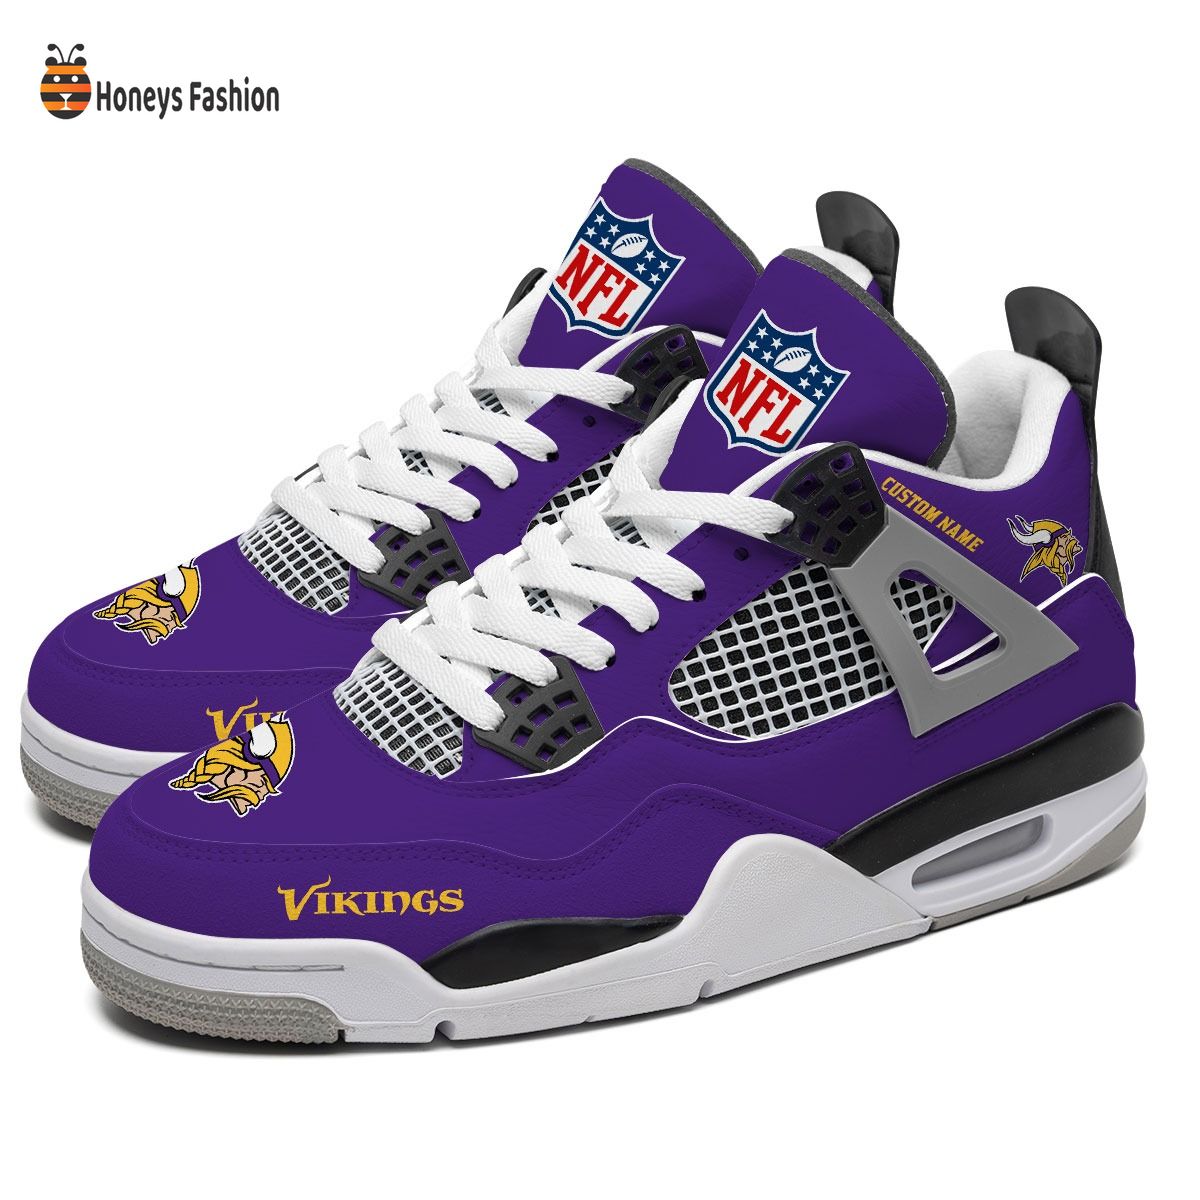 Minnesota Vikings NFL Air Jordan 4 Shoes